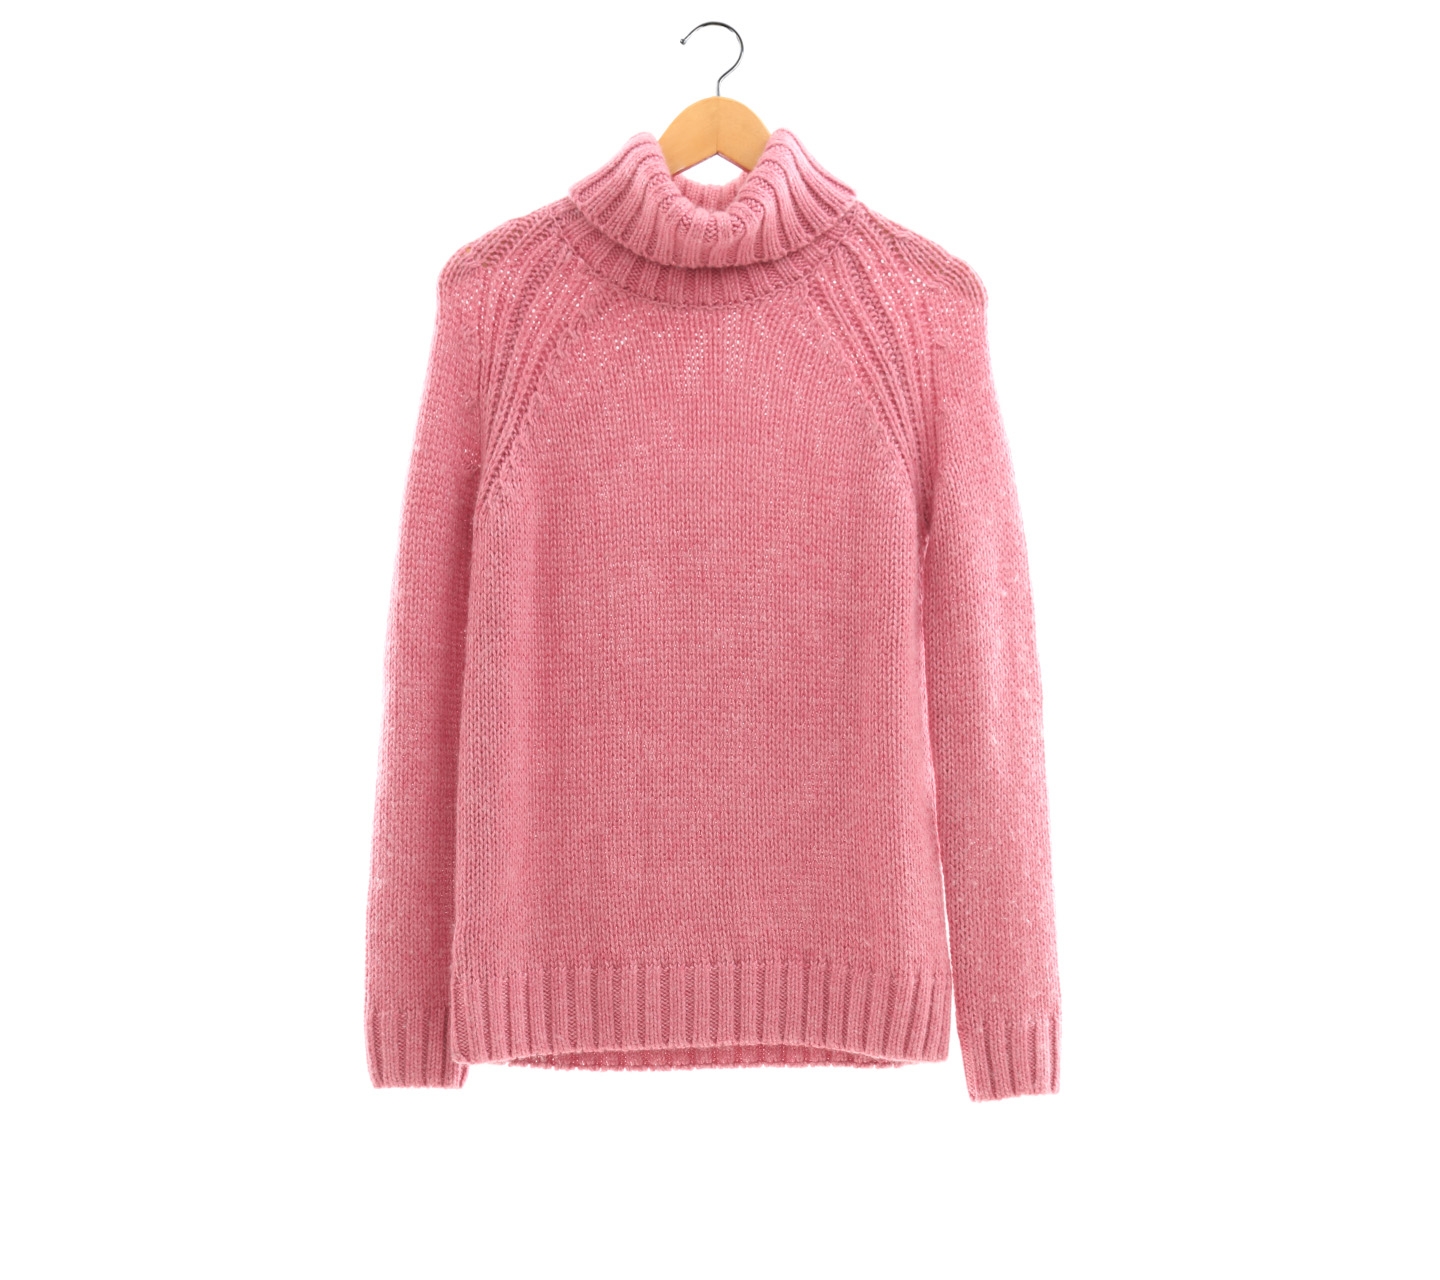 Marks & Spencer Pink Knited Turtle Neck Sweater